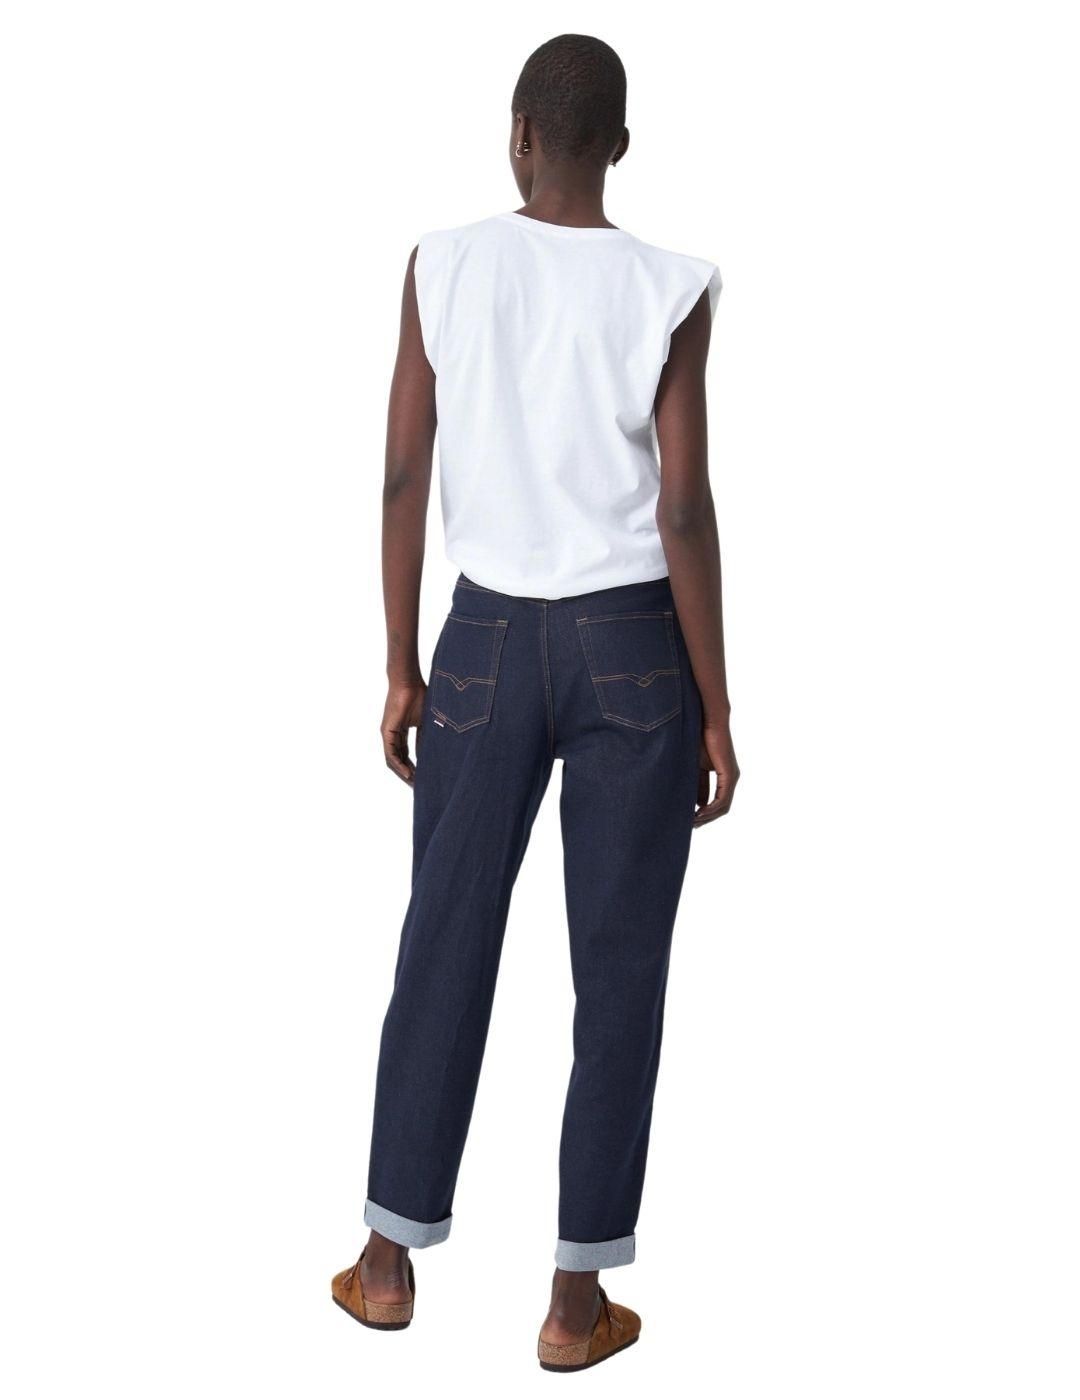 Camiseta sin mangas Salsa Jeans Blanco - Bicos de Fío